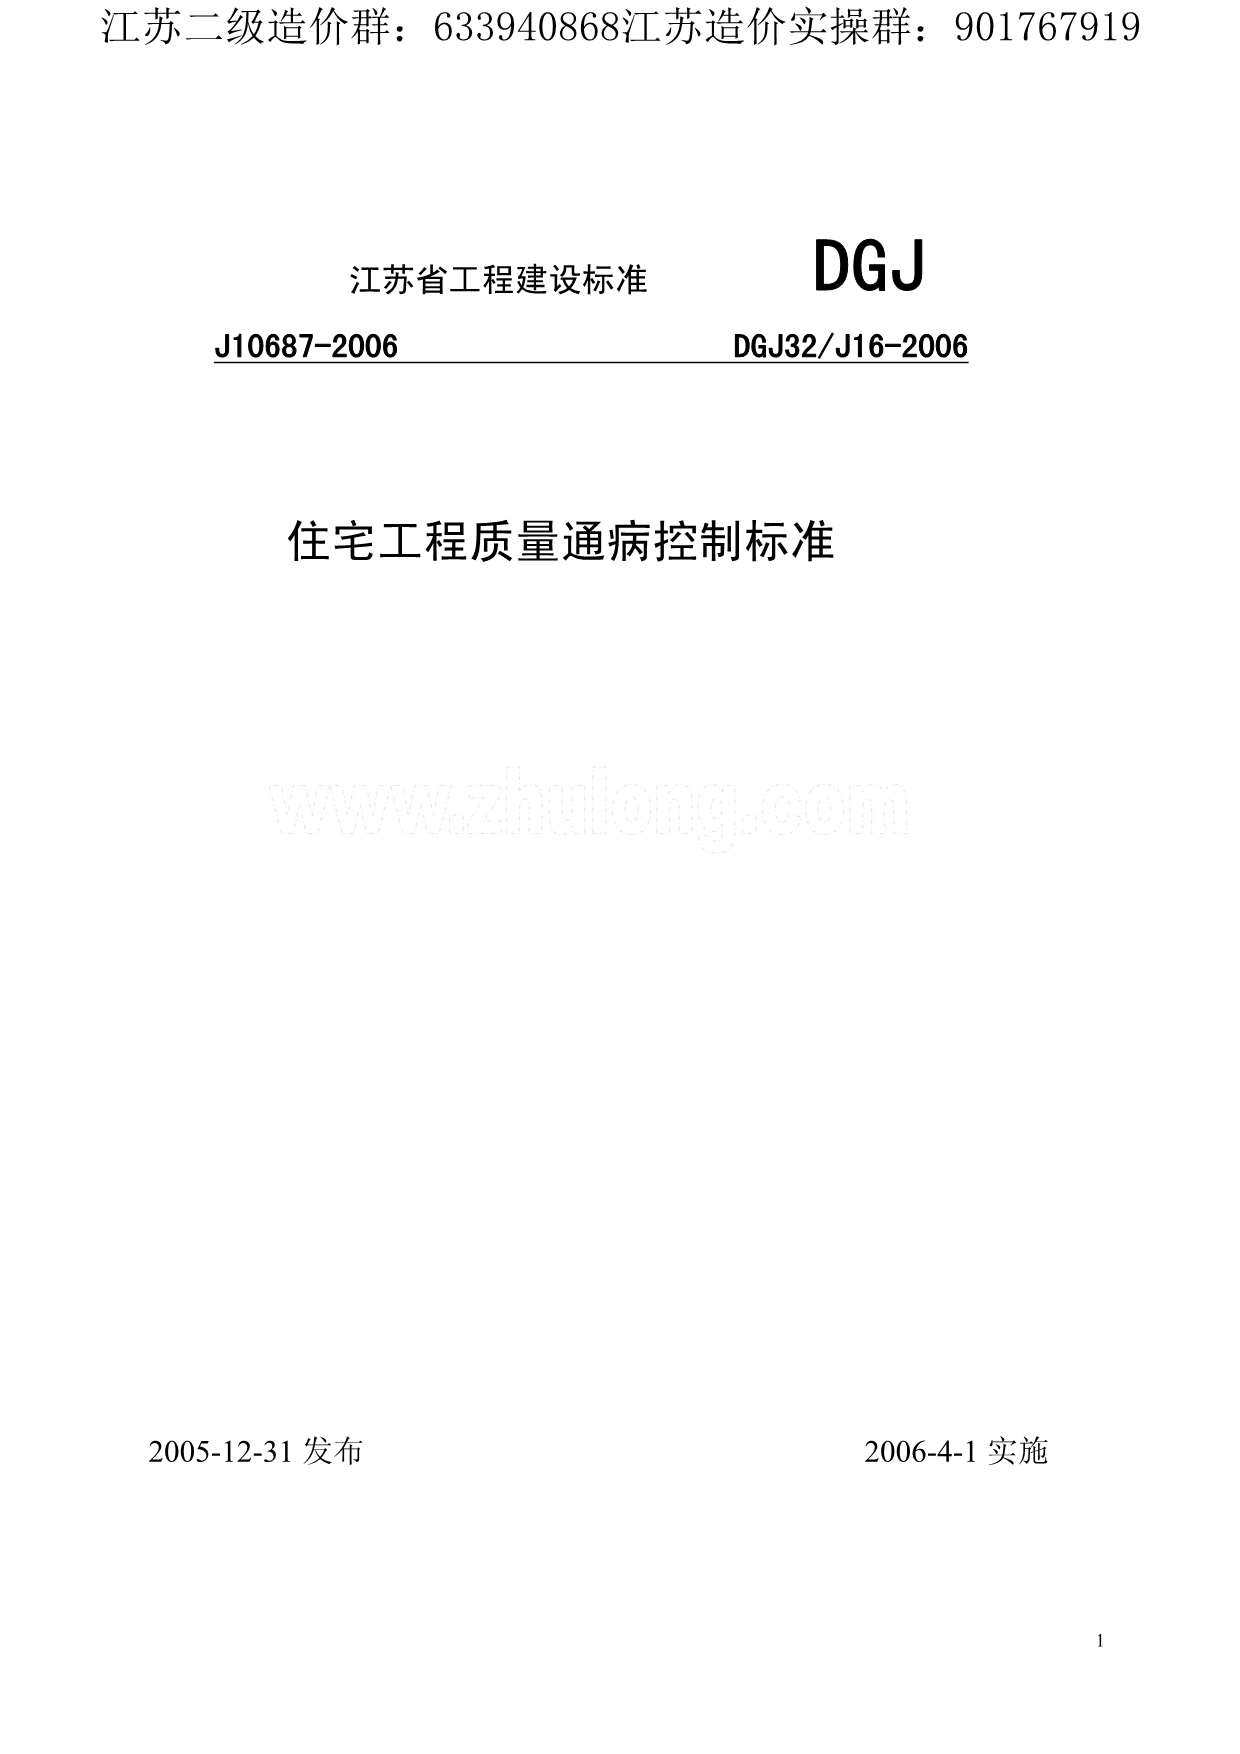 DGJ_32J16-2006_江苏省住宅工程质量通病控制标准